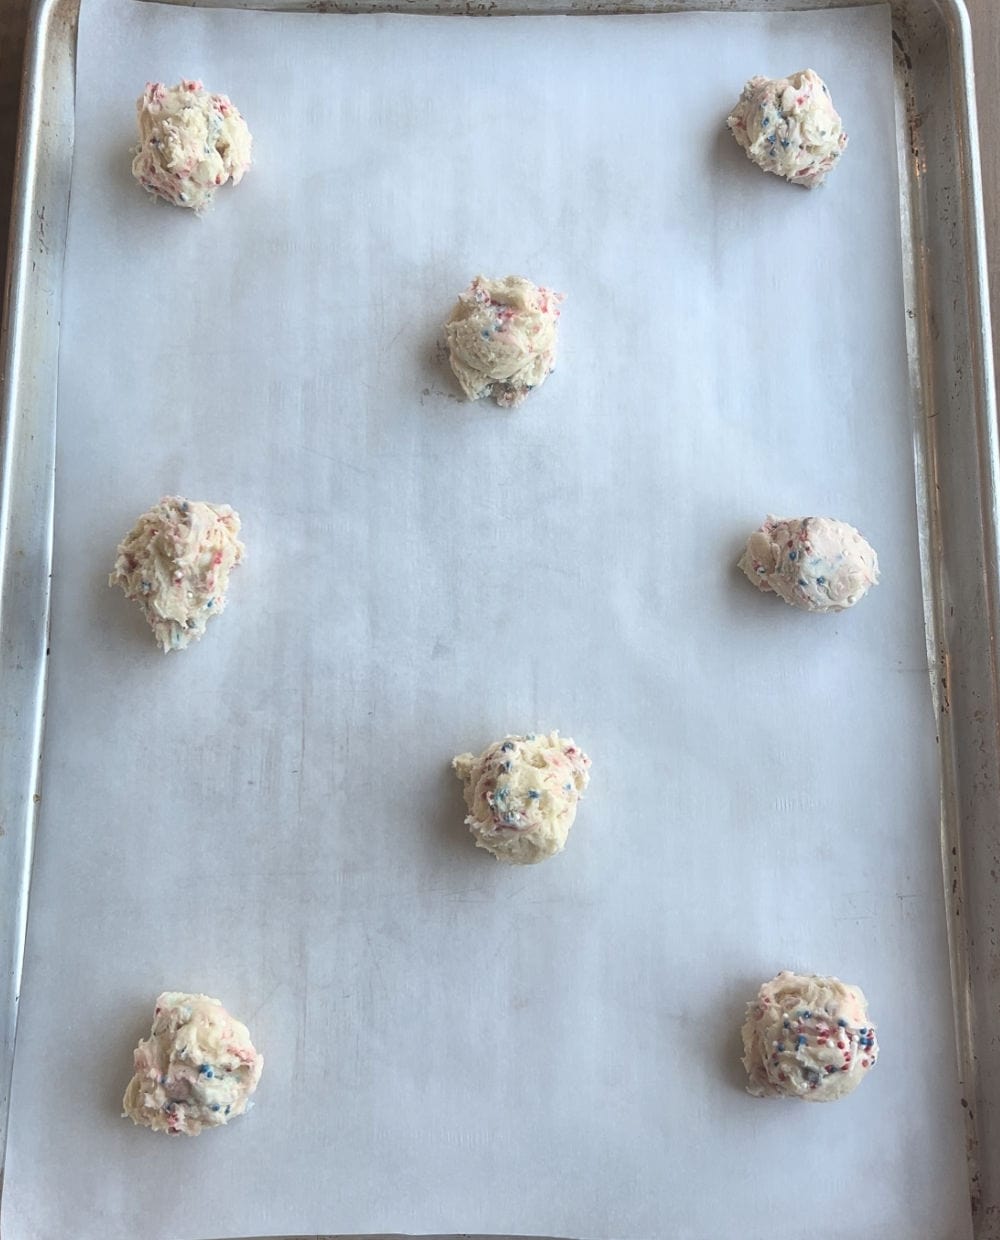 cookie dough balls on baking sheet.